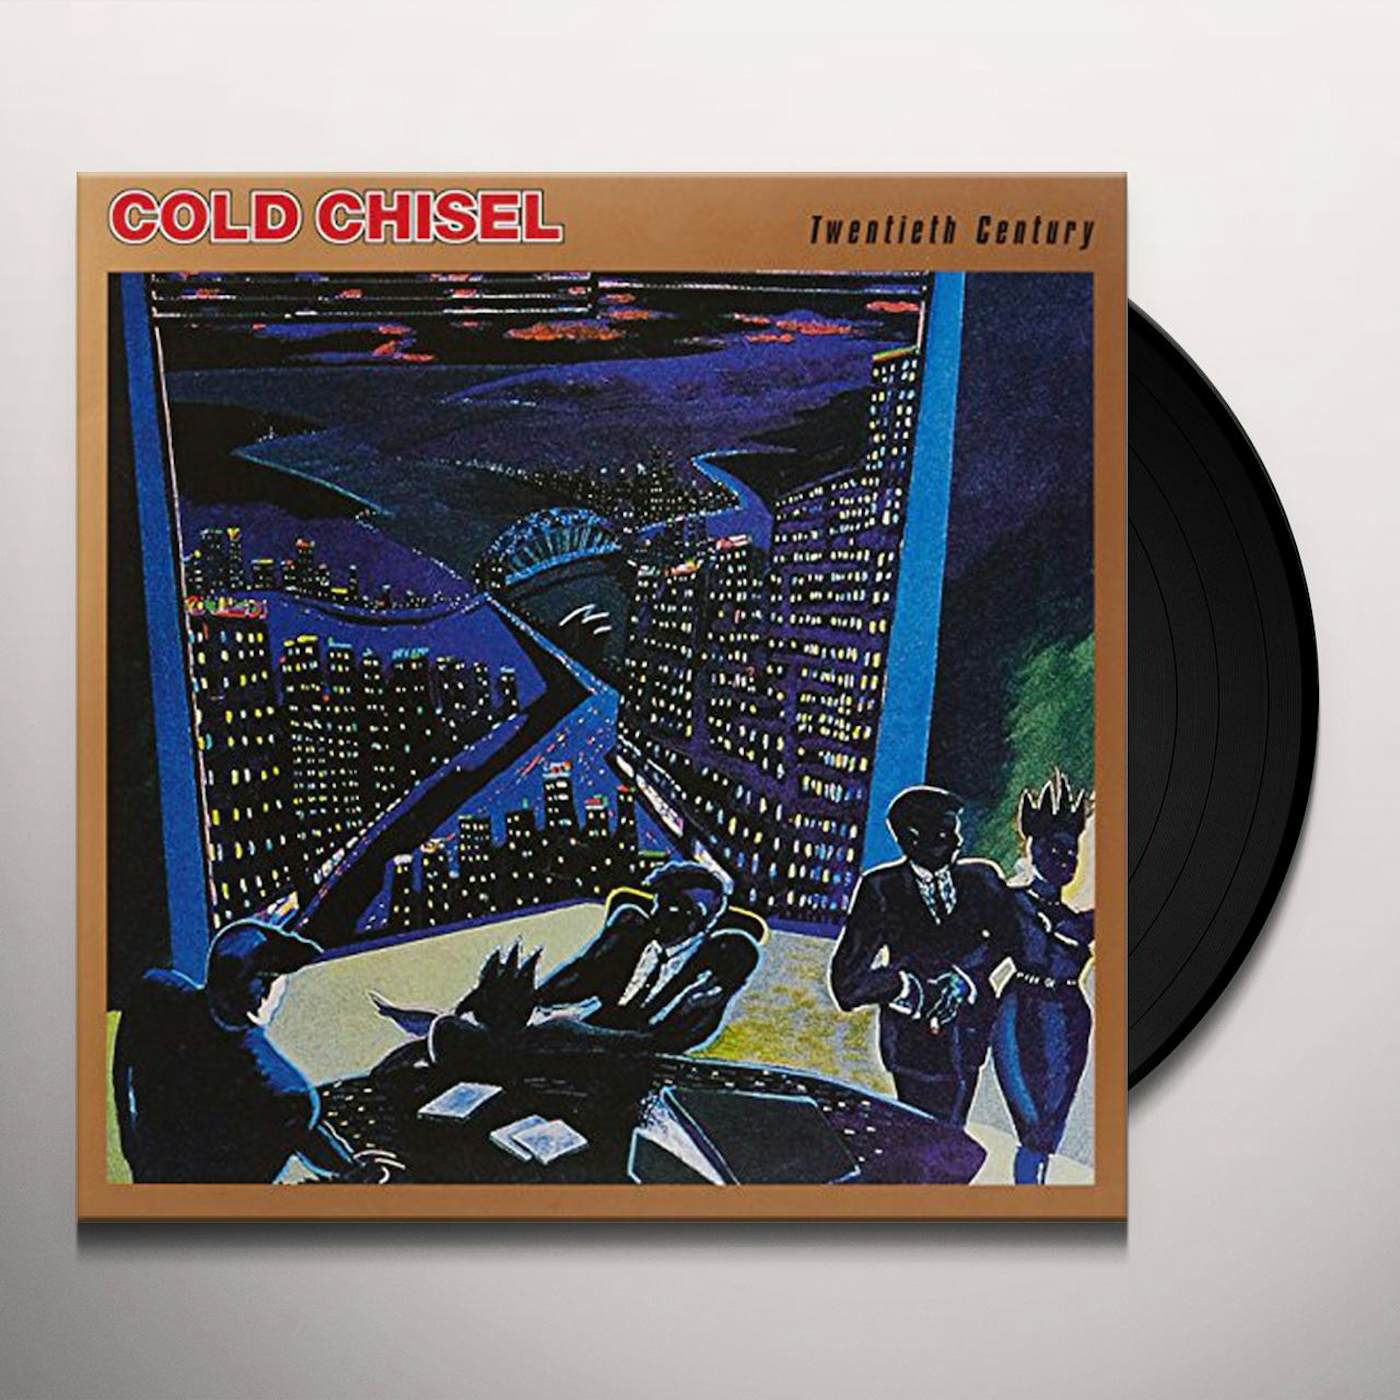 Cold Chisel Twentieth Century Vinyl Record